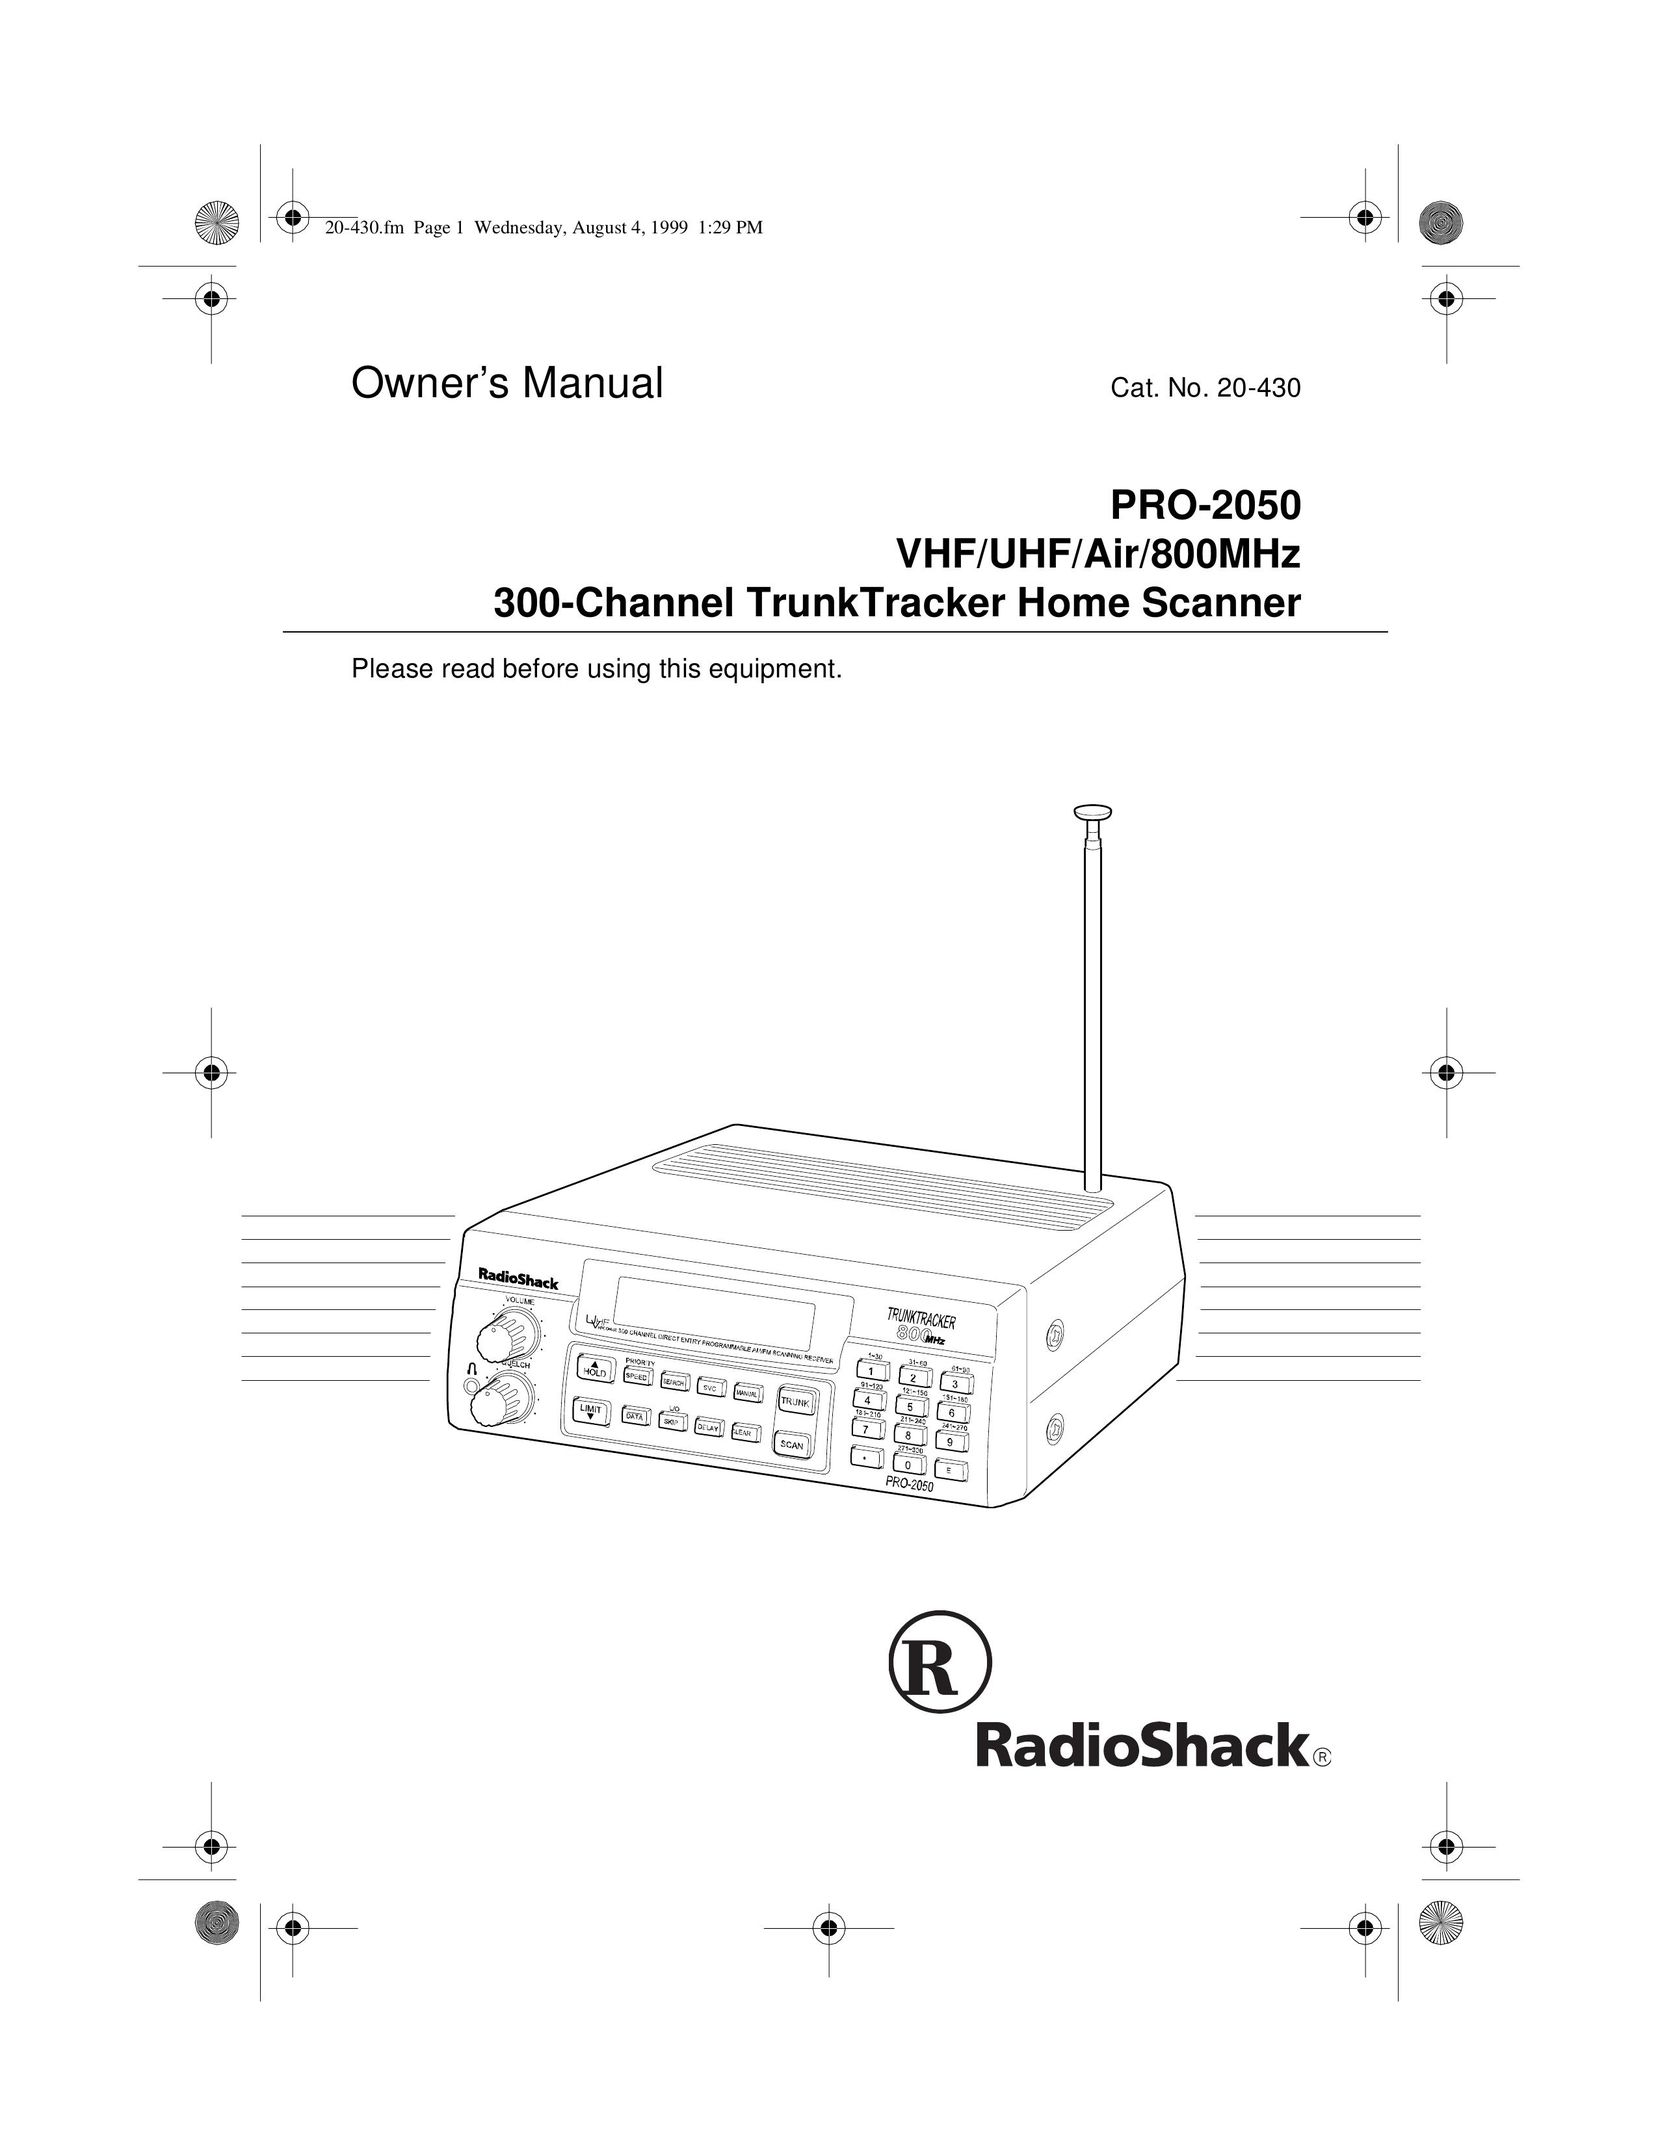 Radio Shack PRO-2050 Scanner User Manual